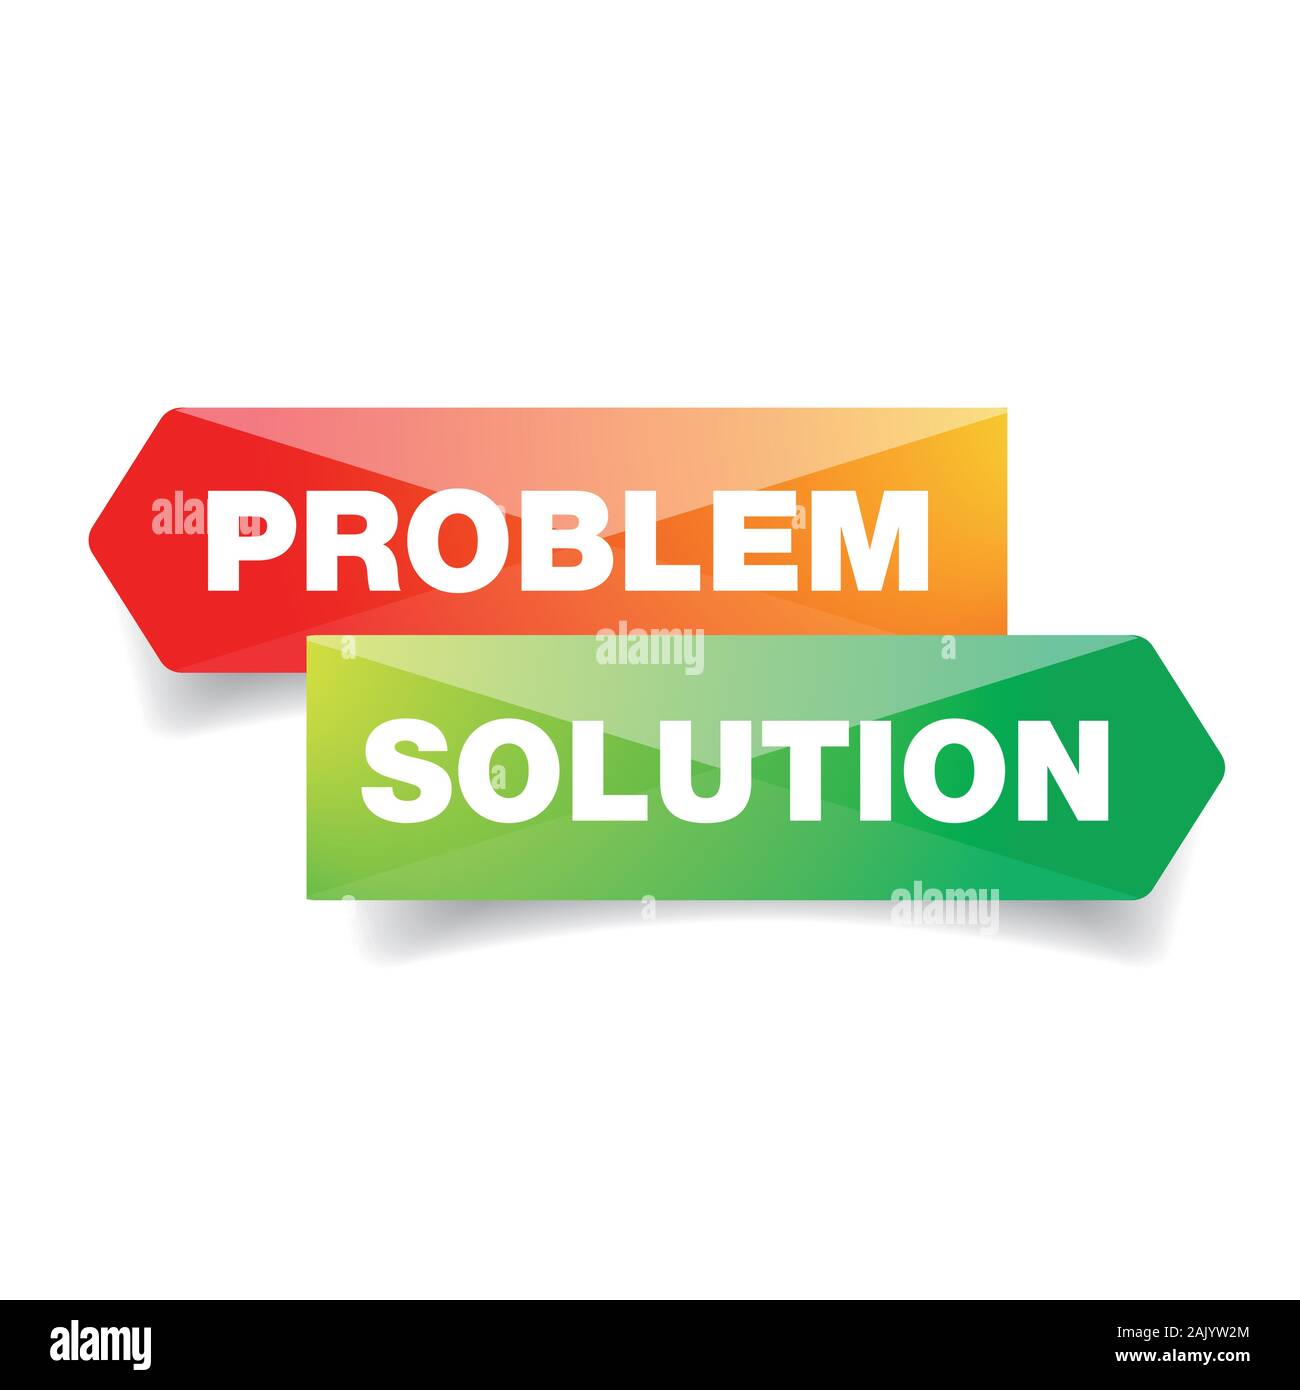 Problem Solution concept communication label Stock Vector